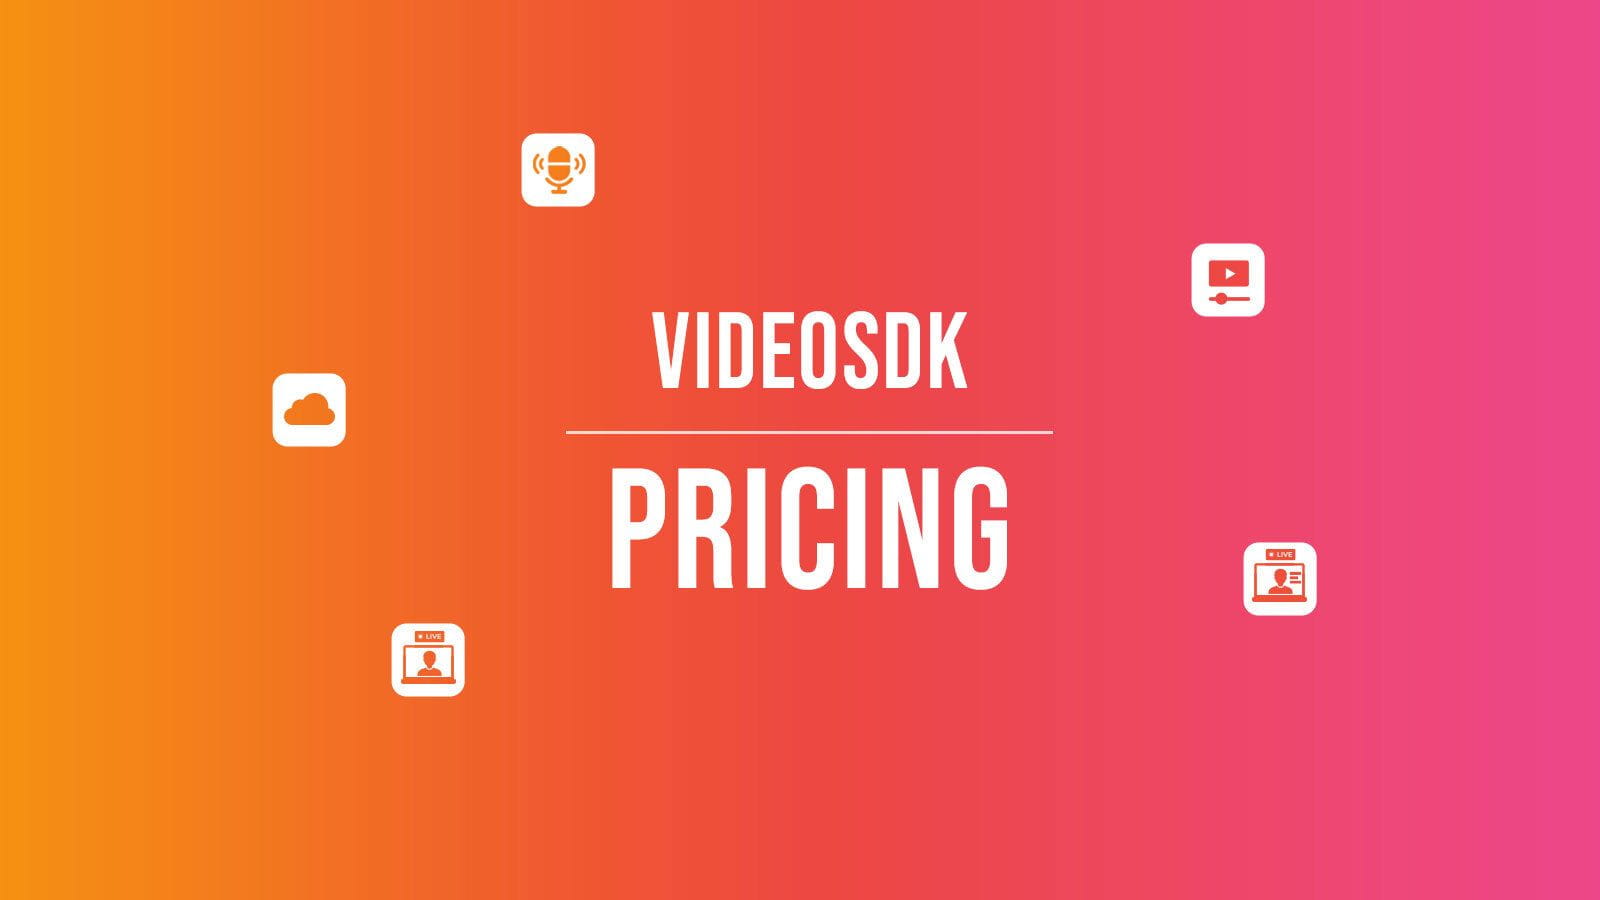 Simple usage-based Video SDK Pricing